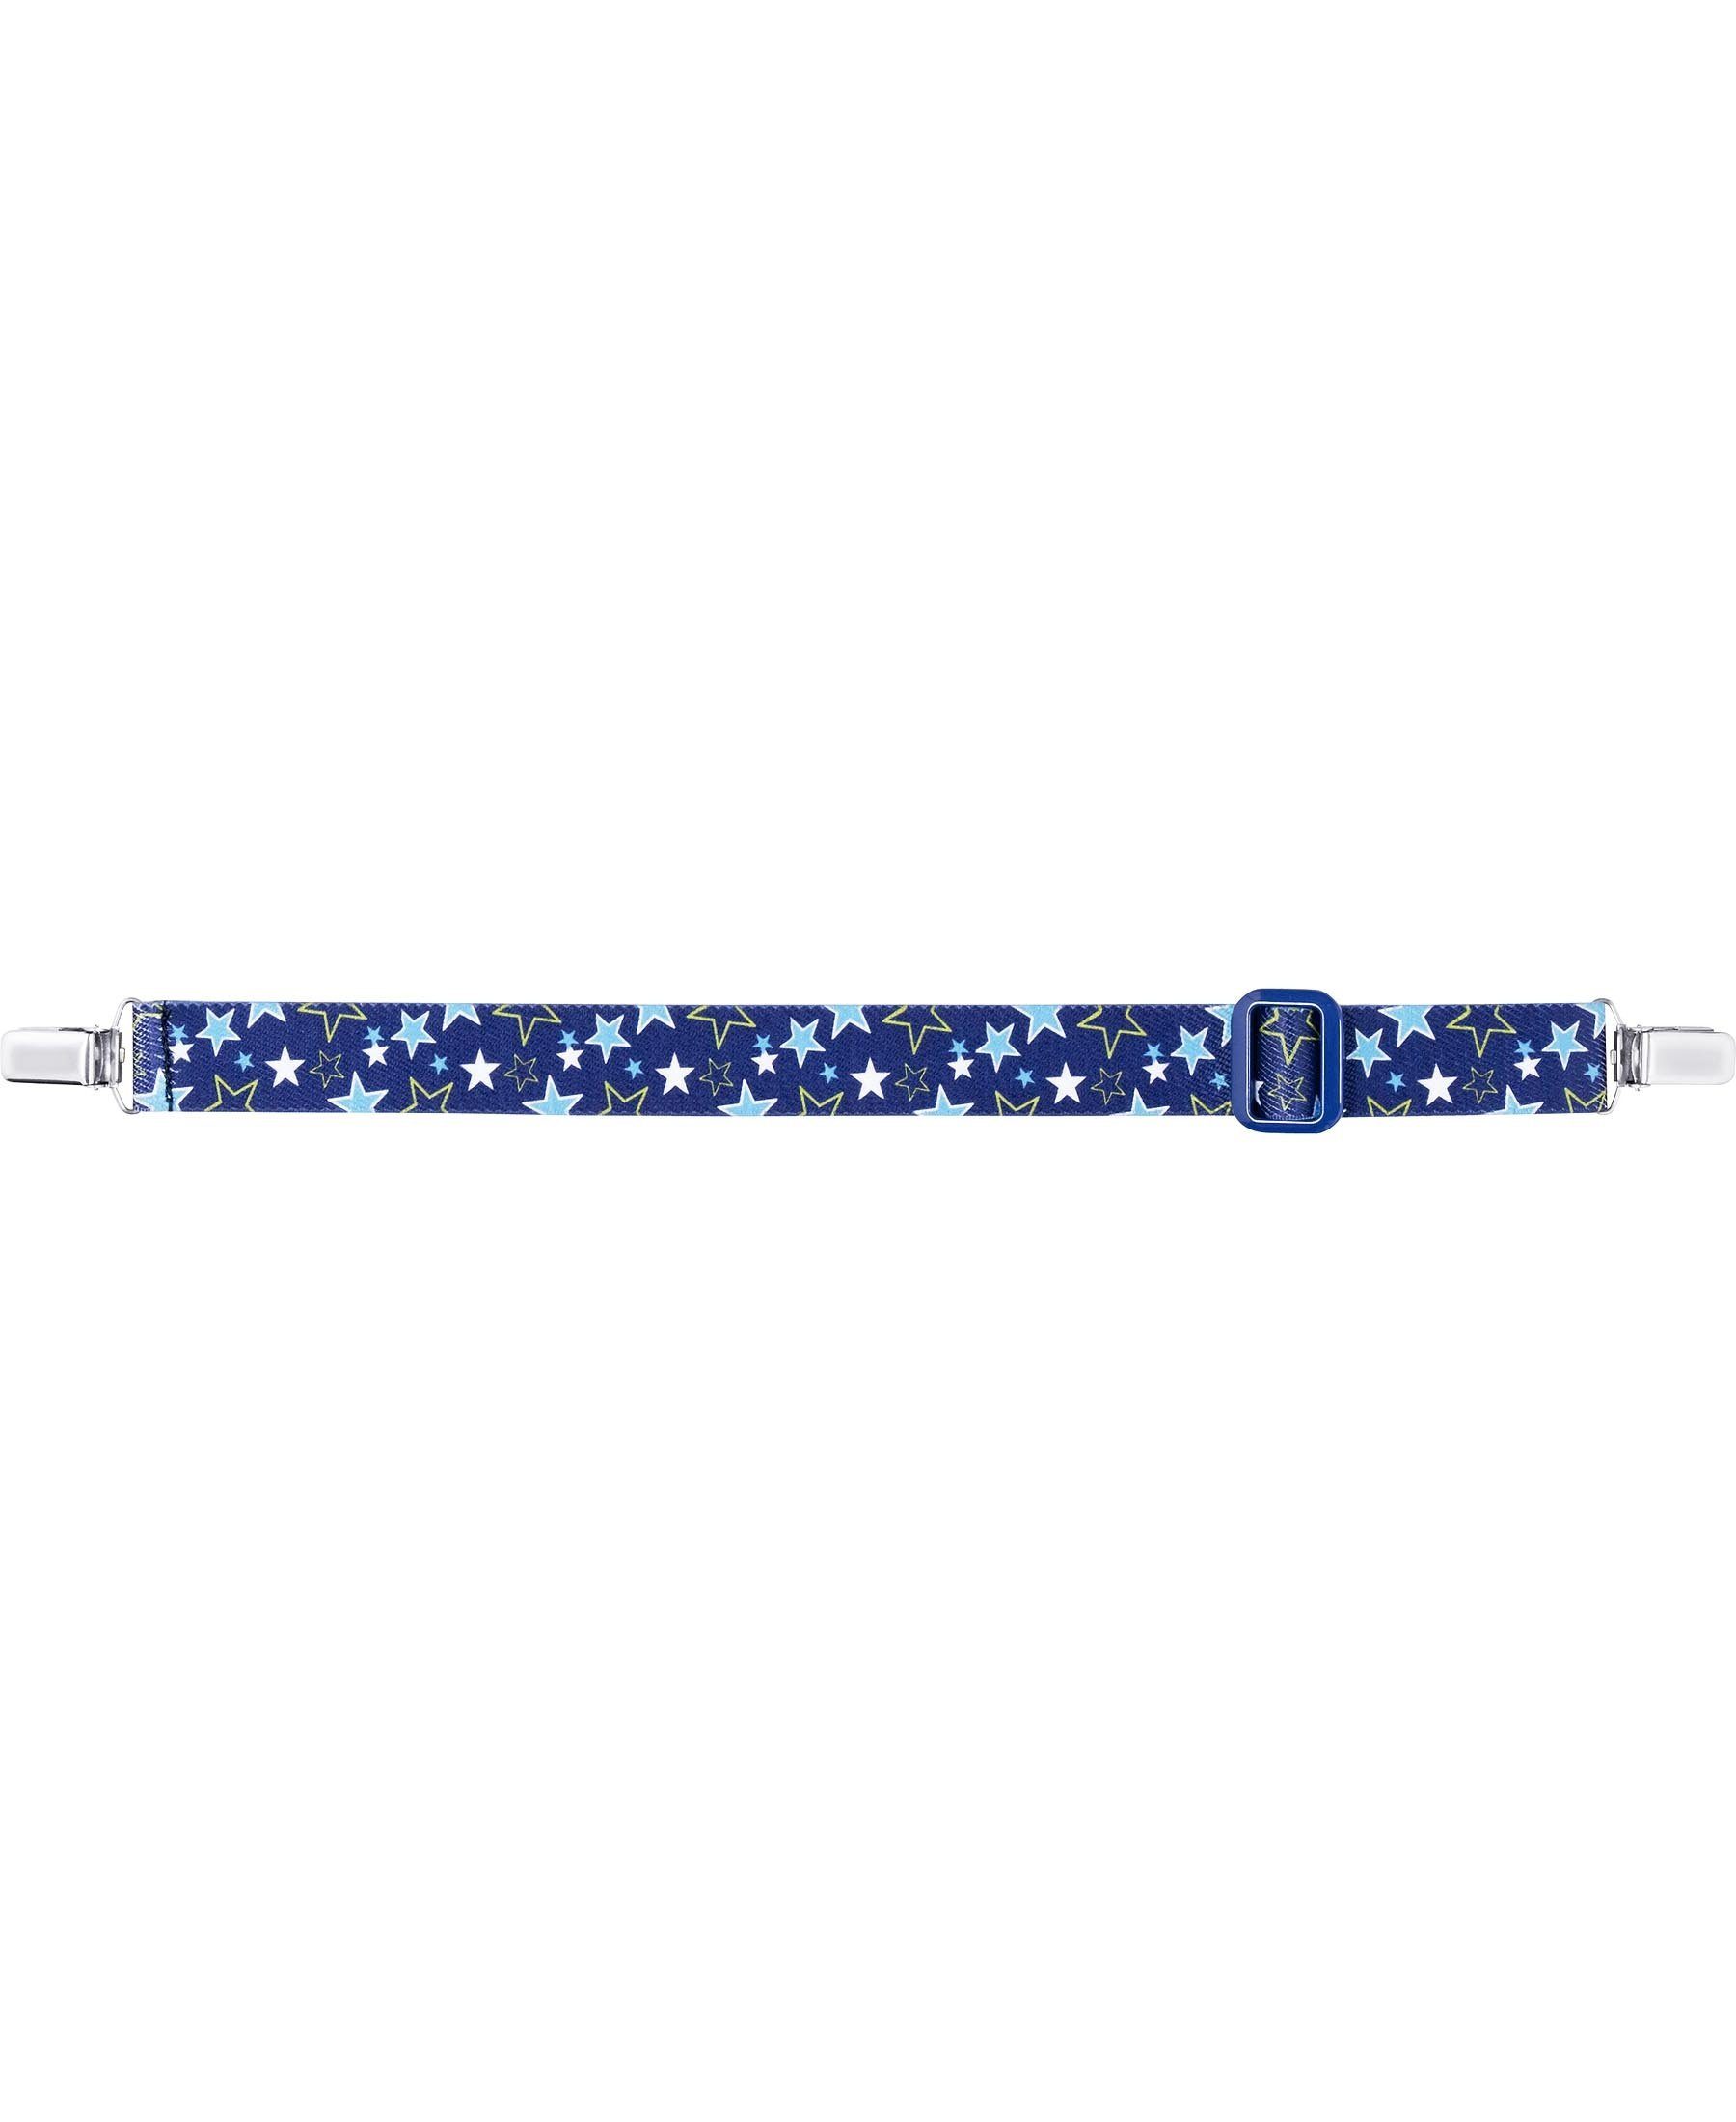 Taillengürtel Playshoes Elastik-Gürtel Blau Clip Sterne